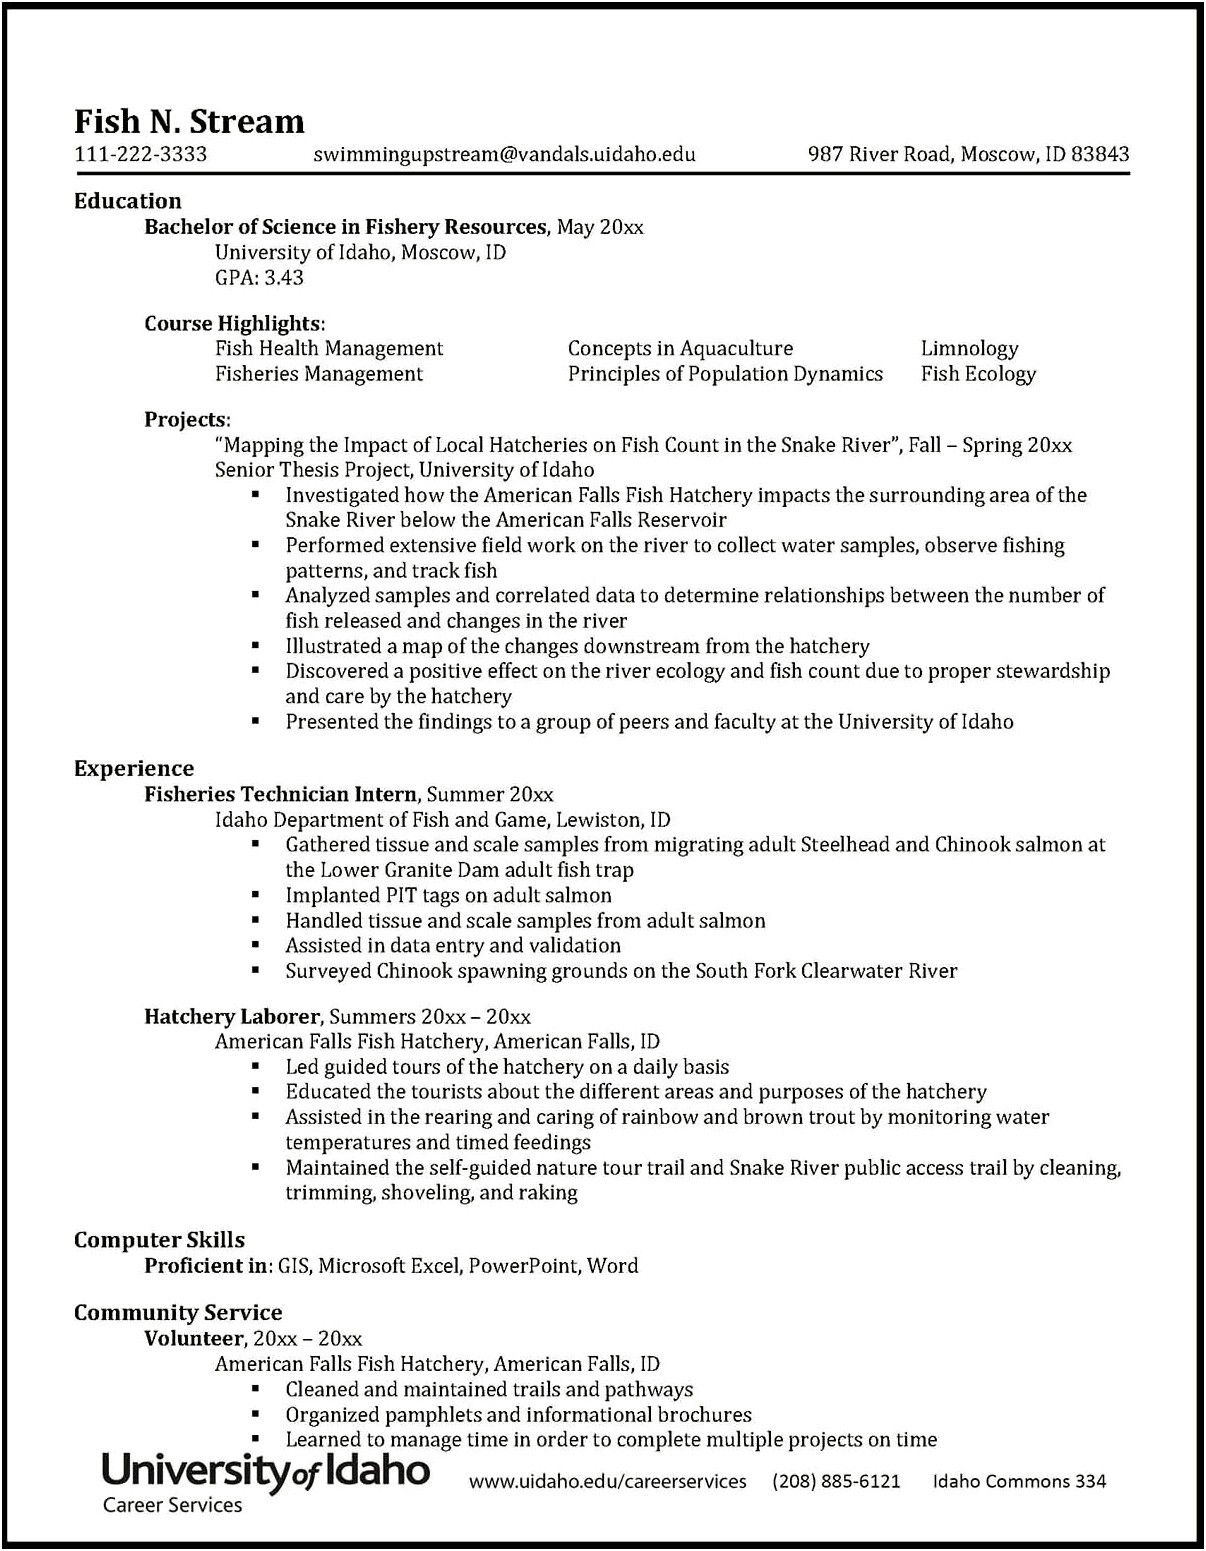 Sample Resume Of Affiliations And Volunteer Work